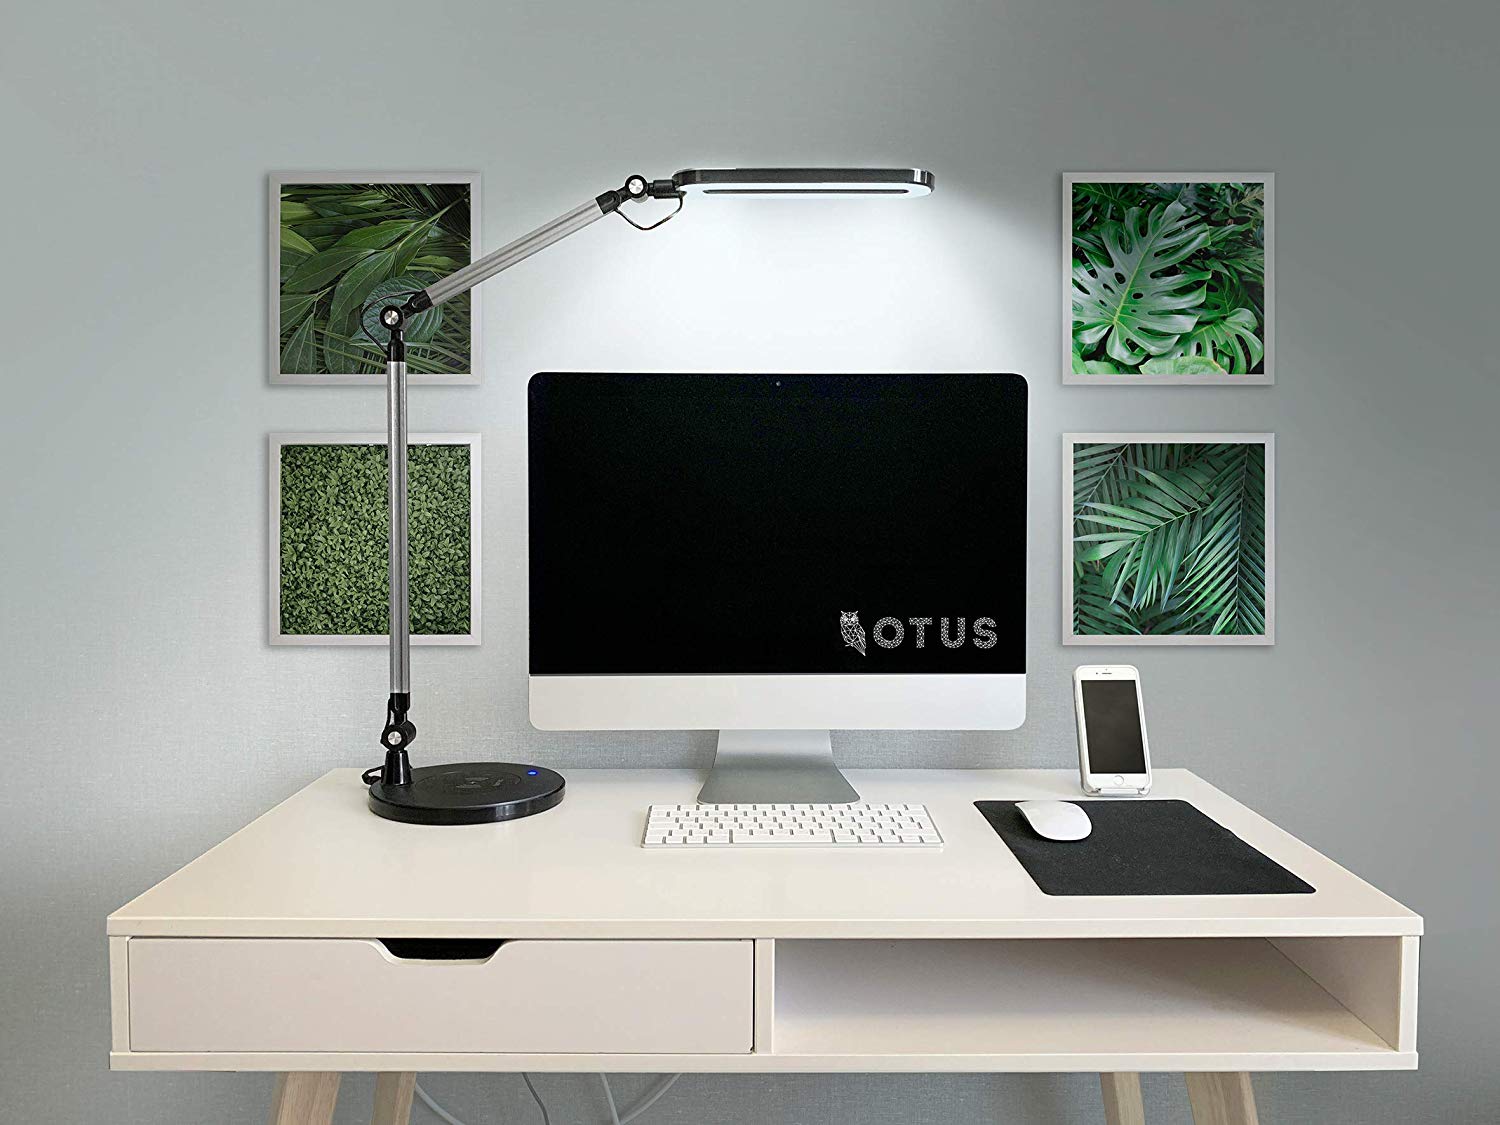 OTUS LED Architect Desk Lamp Wireless Charger